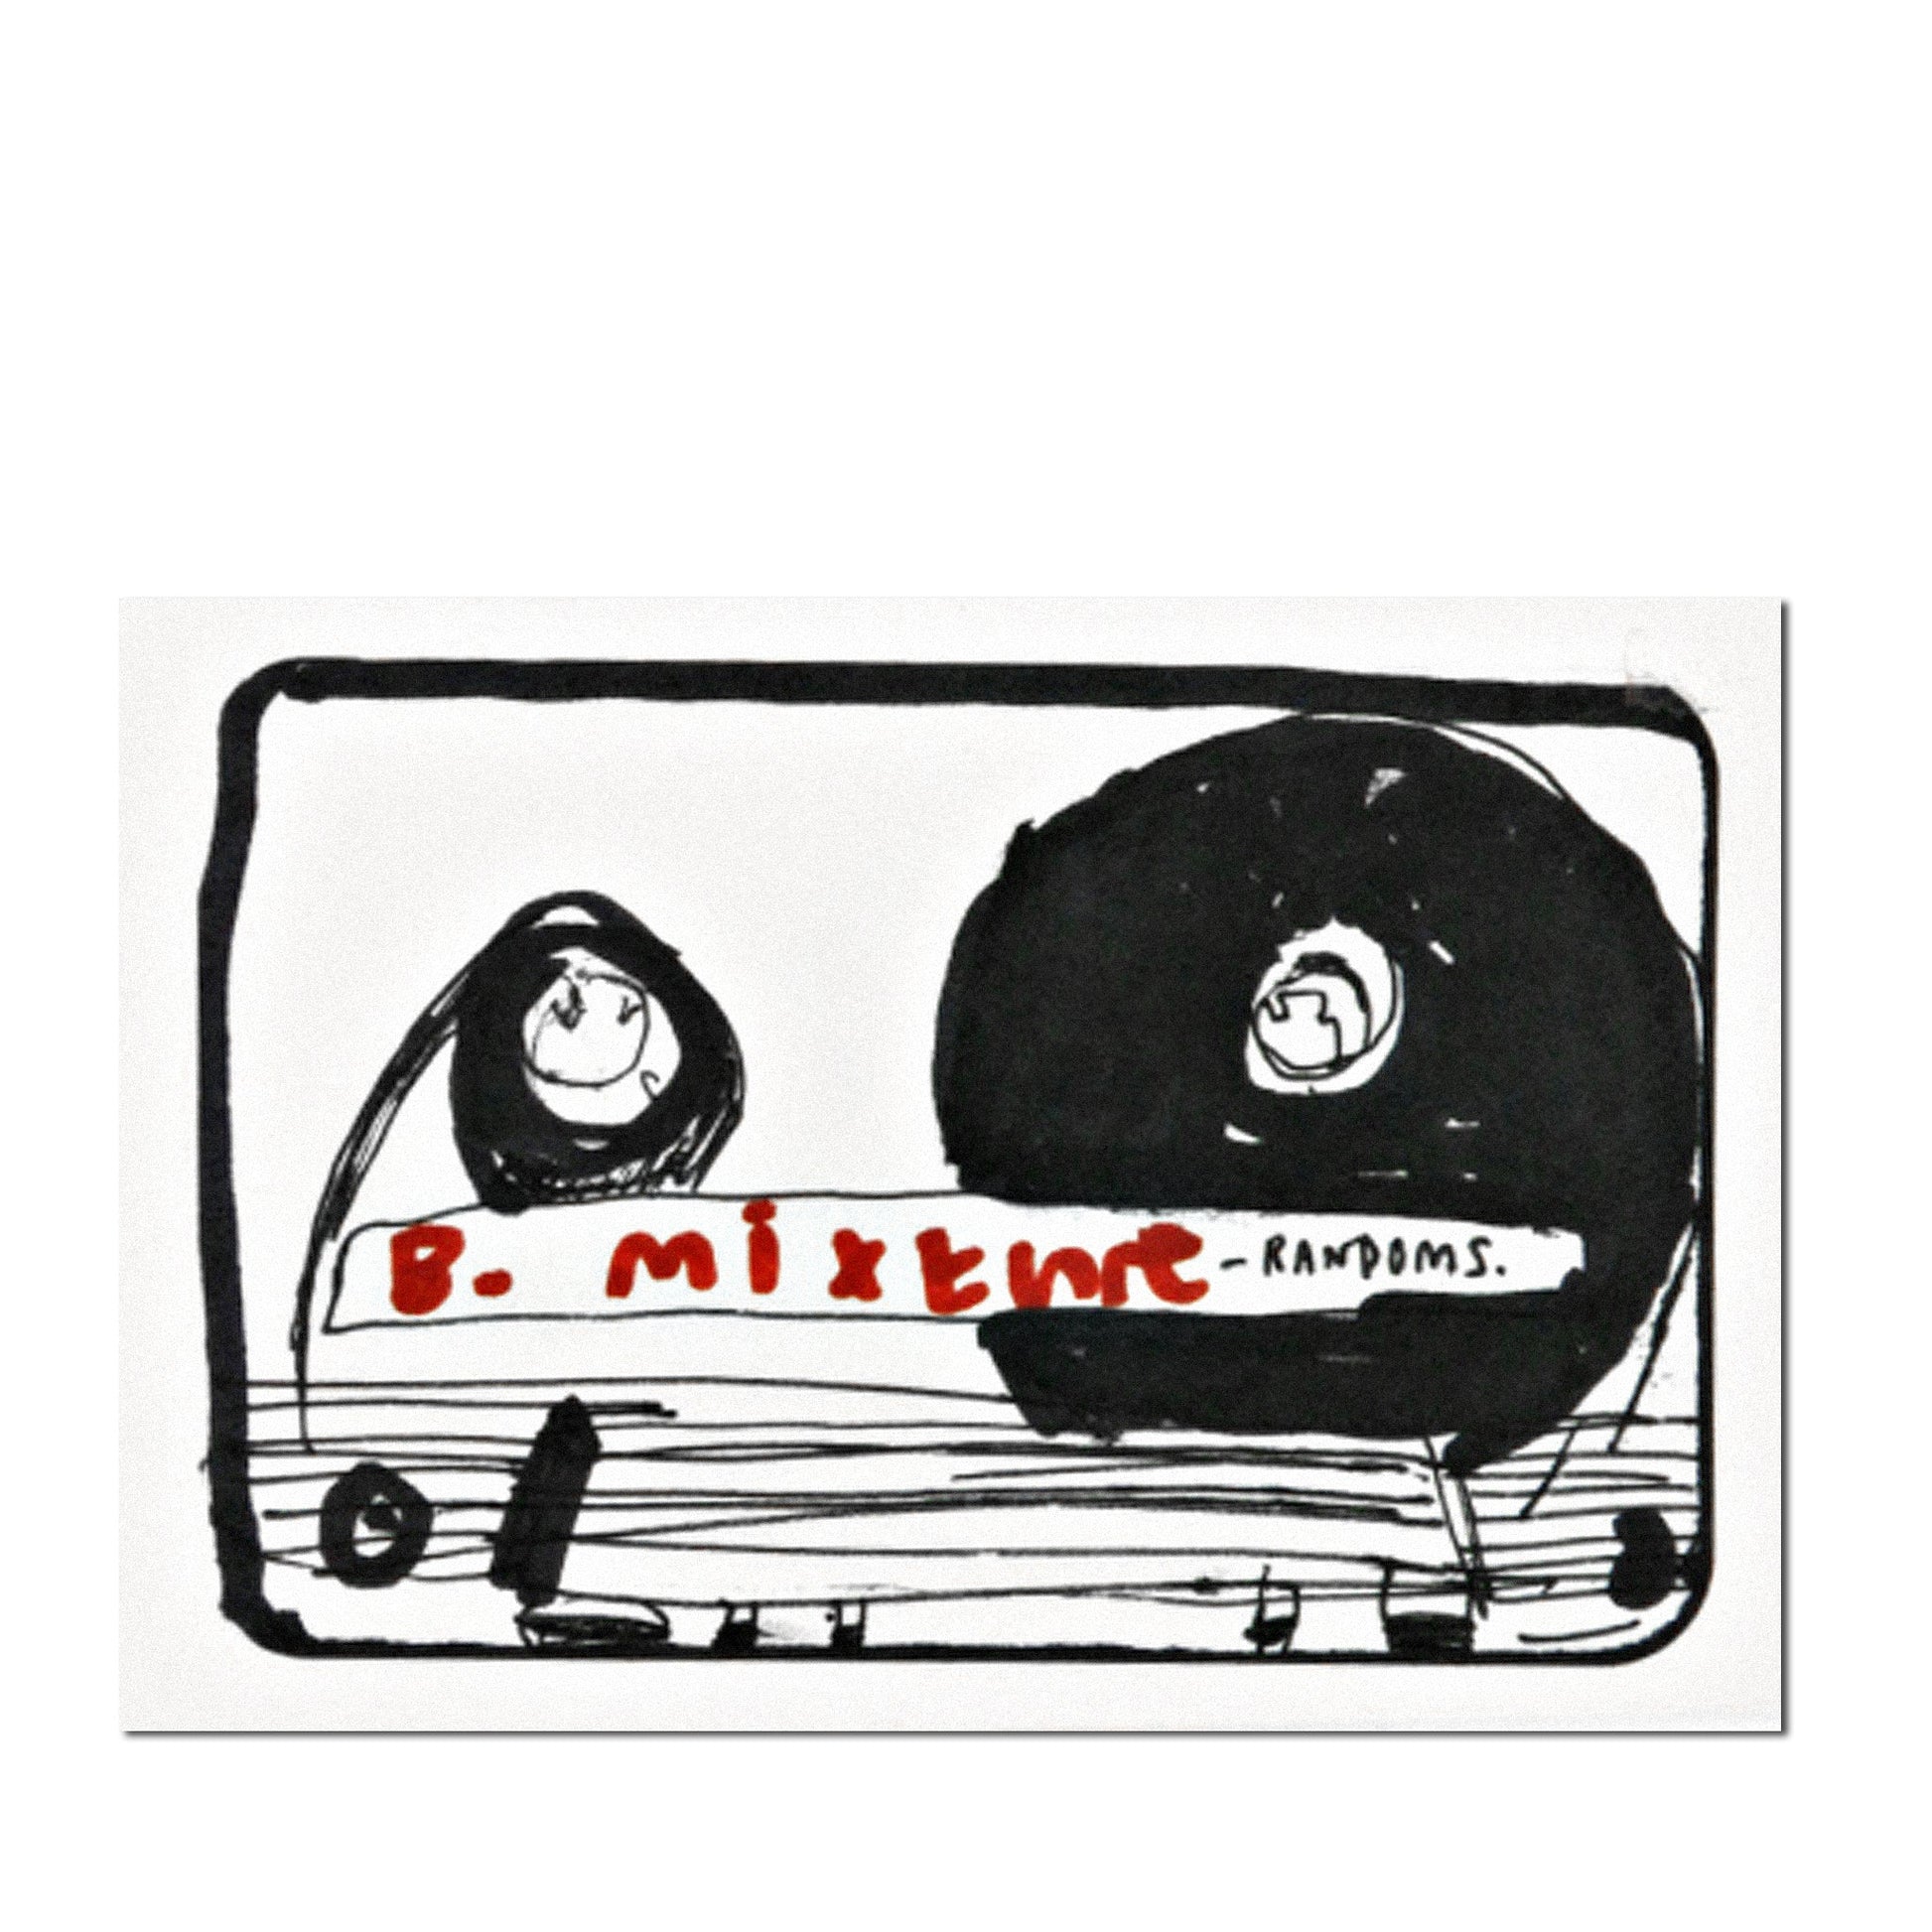 Postkarte "B-Mixtape" - Vandeley